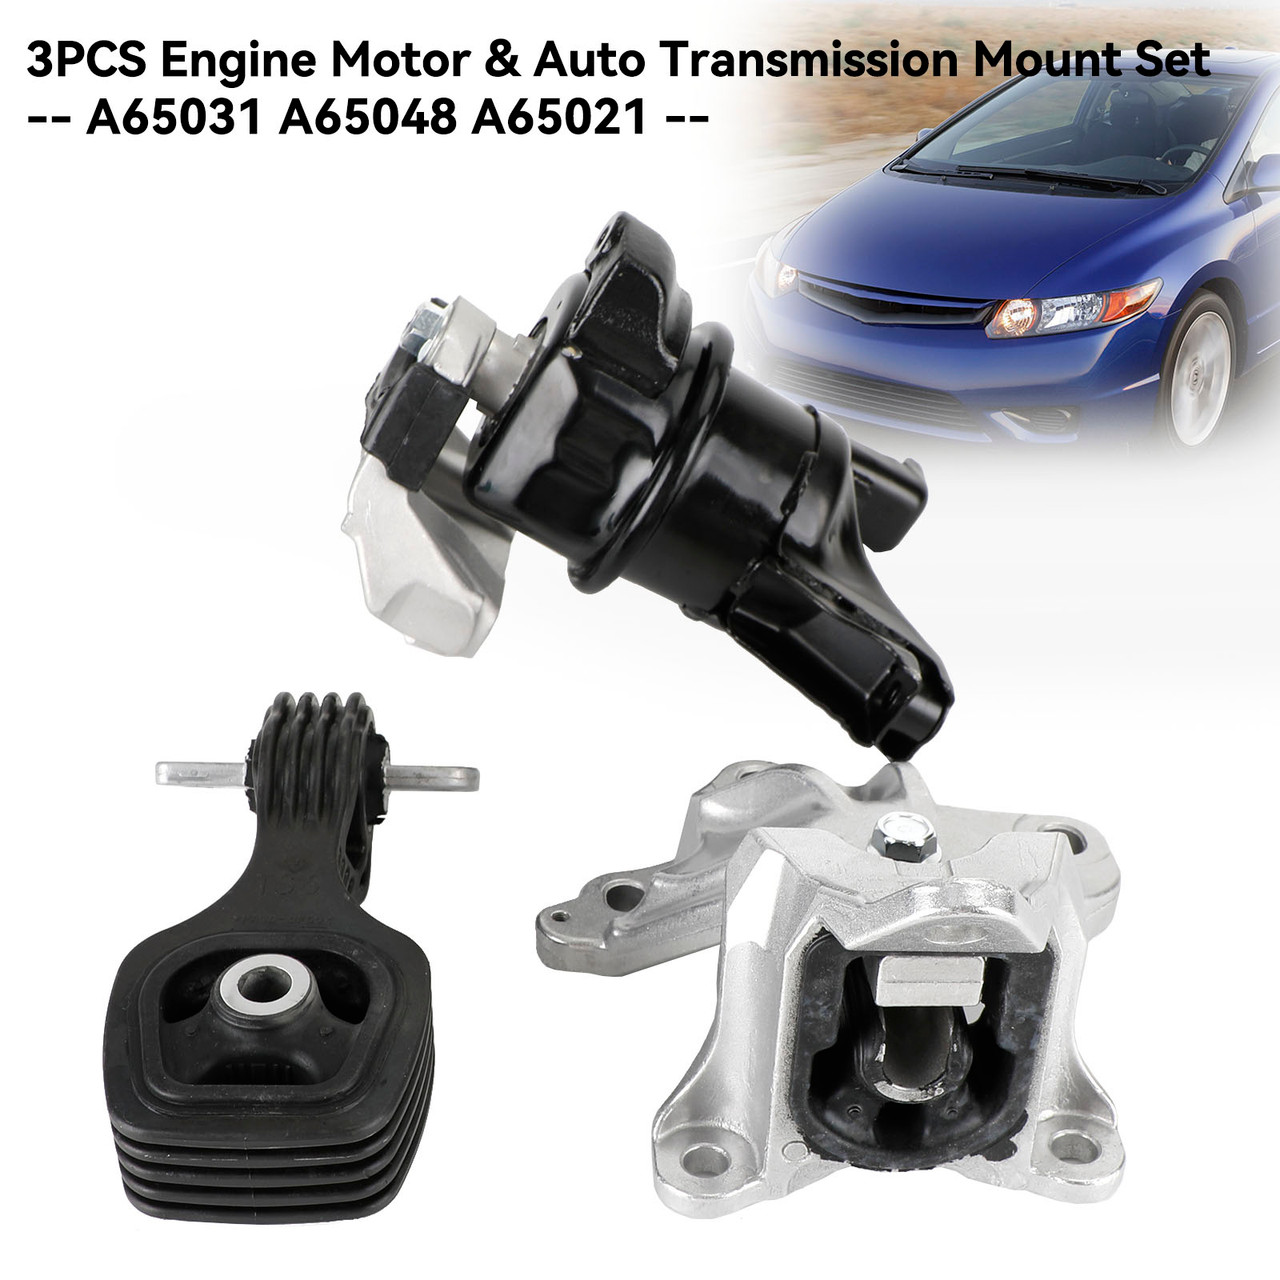 3PCS Engine Motor & Auto Transmission Mount Set For Honda Civic 1.8L 2012-2013